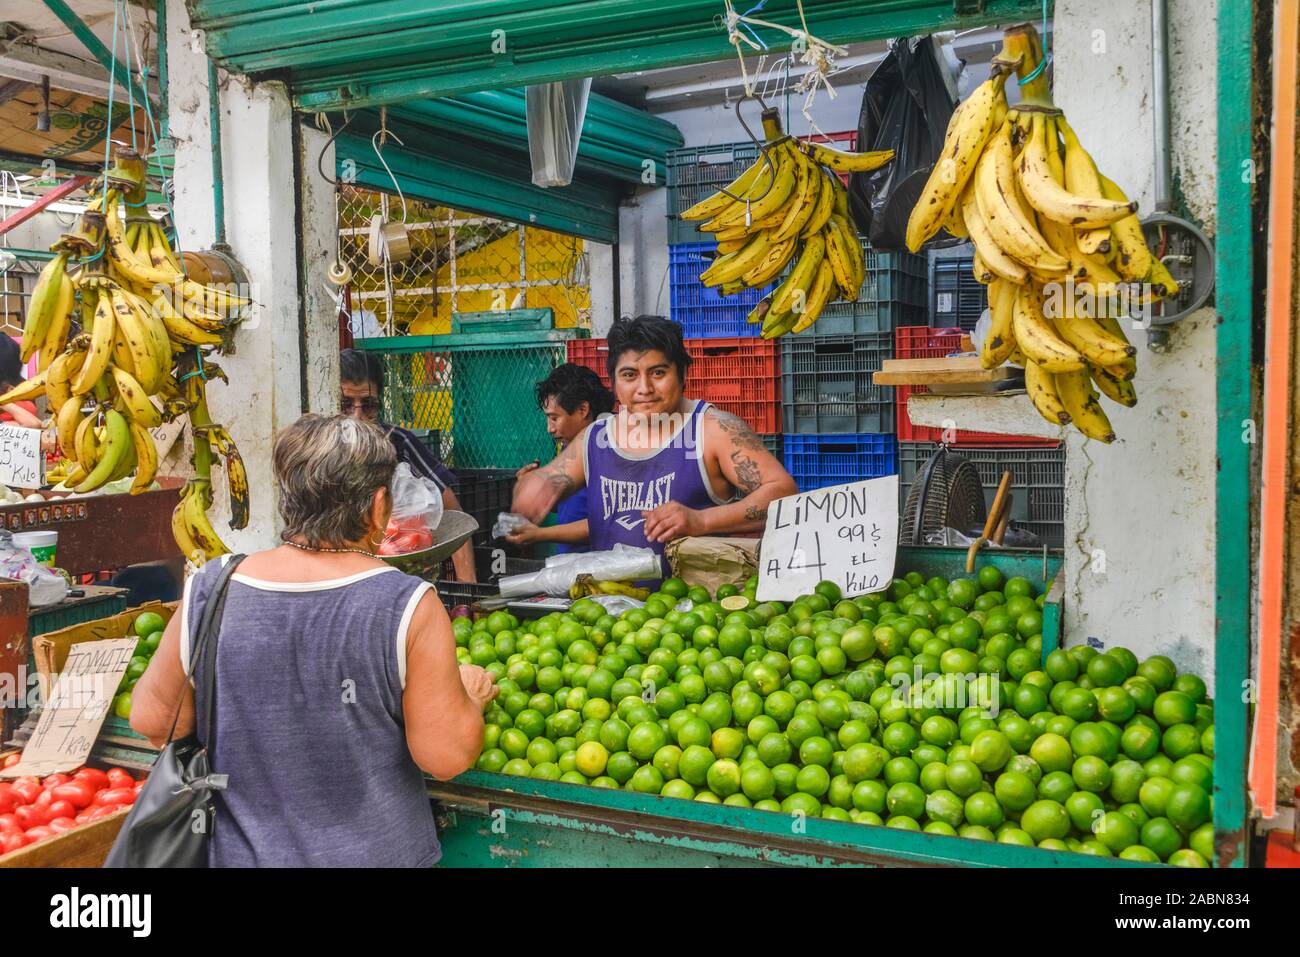 Limonen, Marktstand, Obst und Früchte, 'Mercado Lucas de Gálvez', Merida, Yucatan, Mexiko Stockfoto